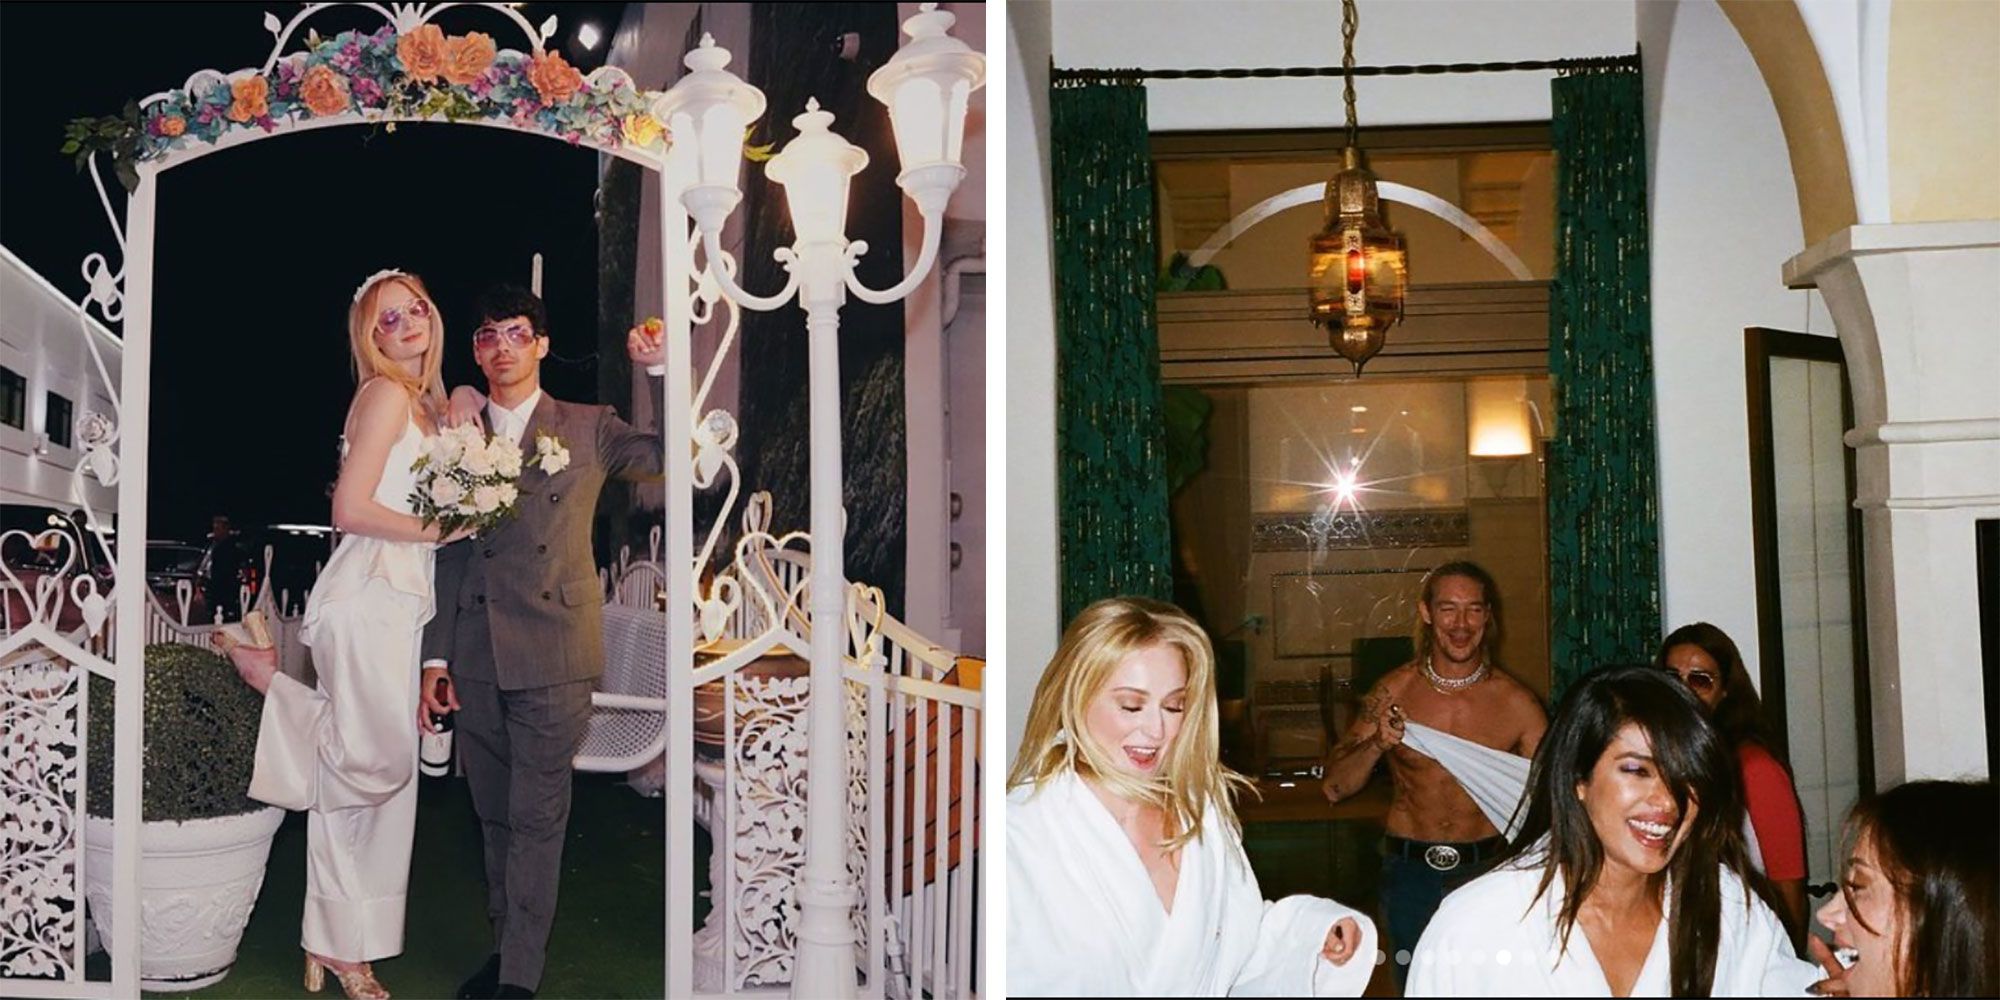 Sophie Turner and Joe Jonas celebrate two years of Las Vegas wedding with  unseen photos, Priyanka Chopra makes a cameo